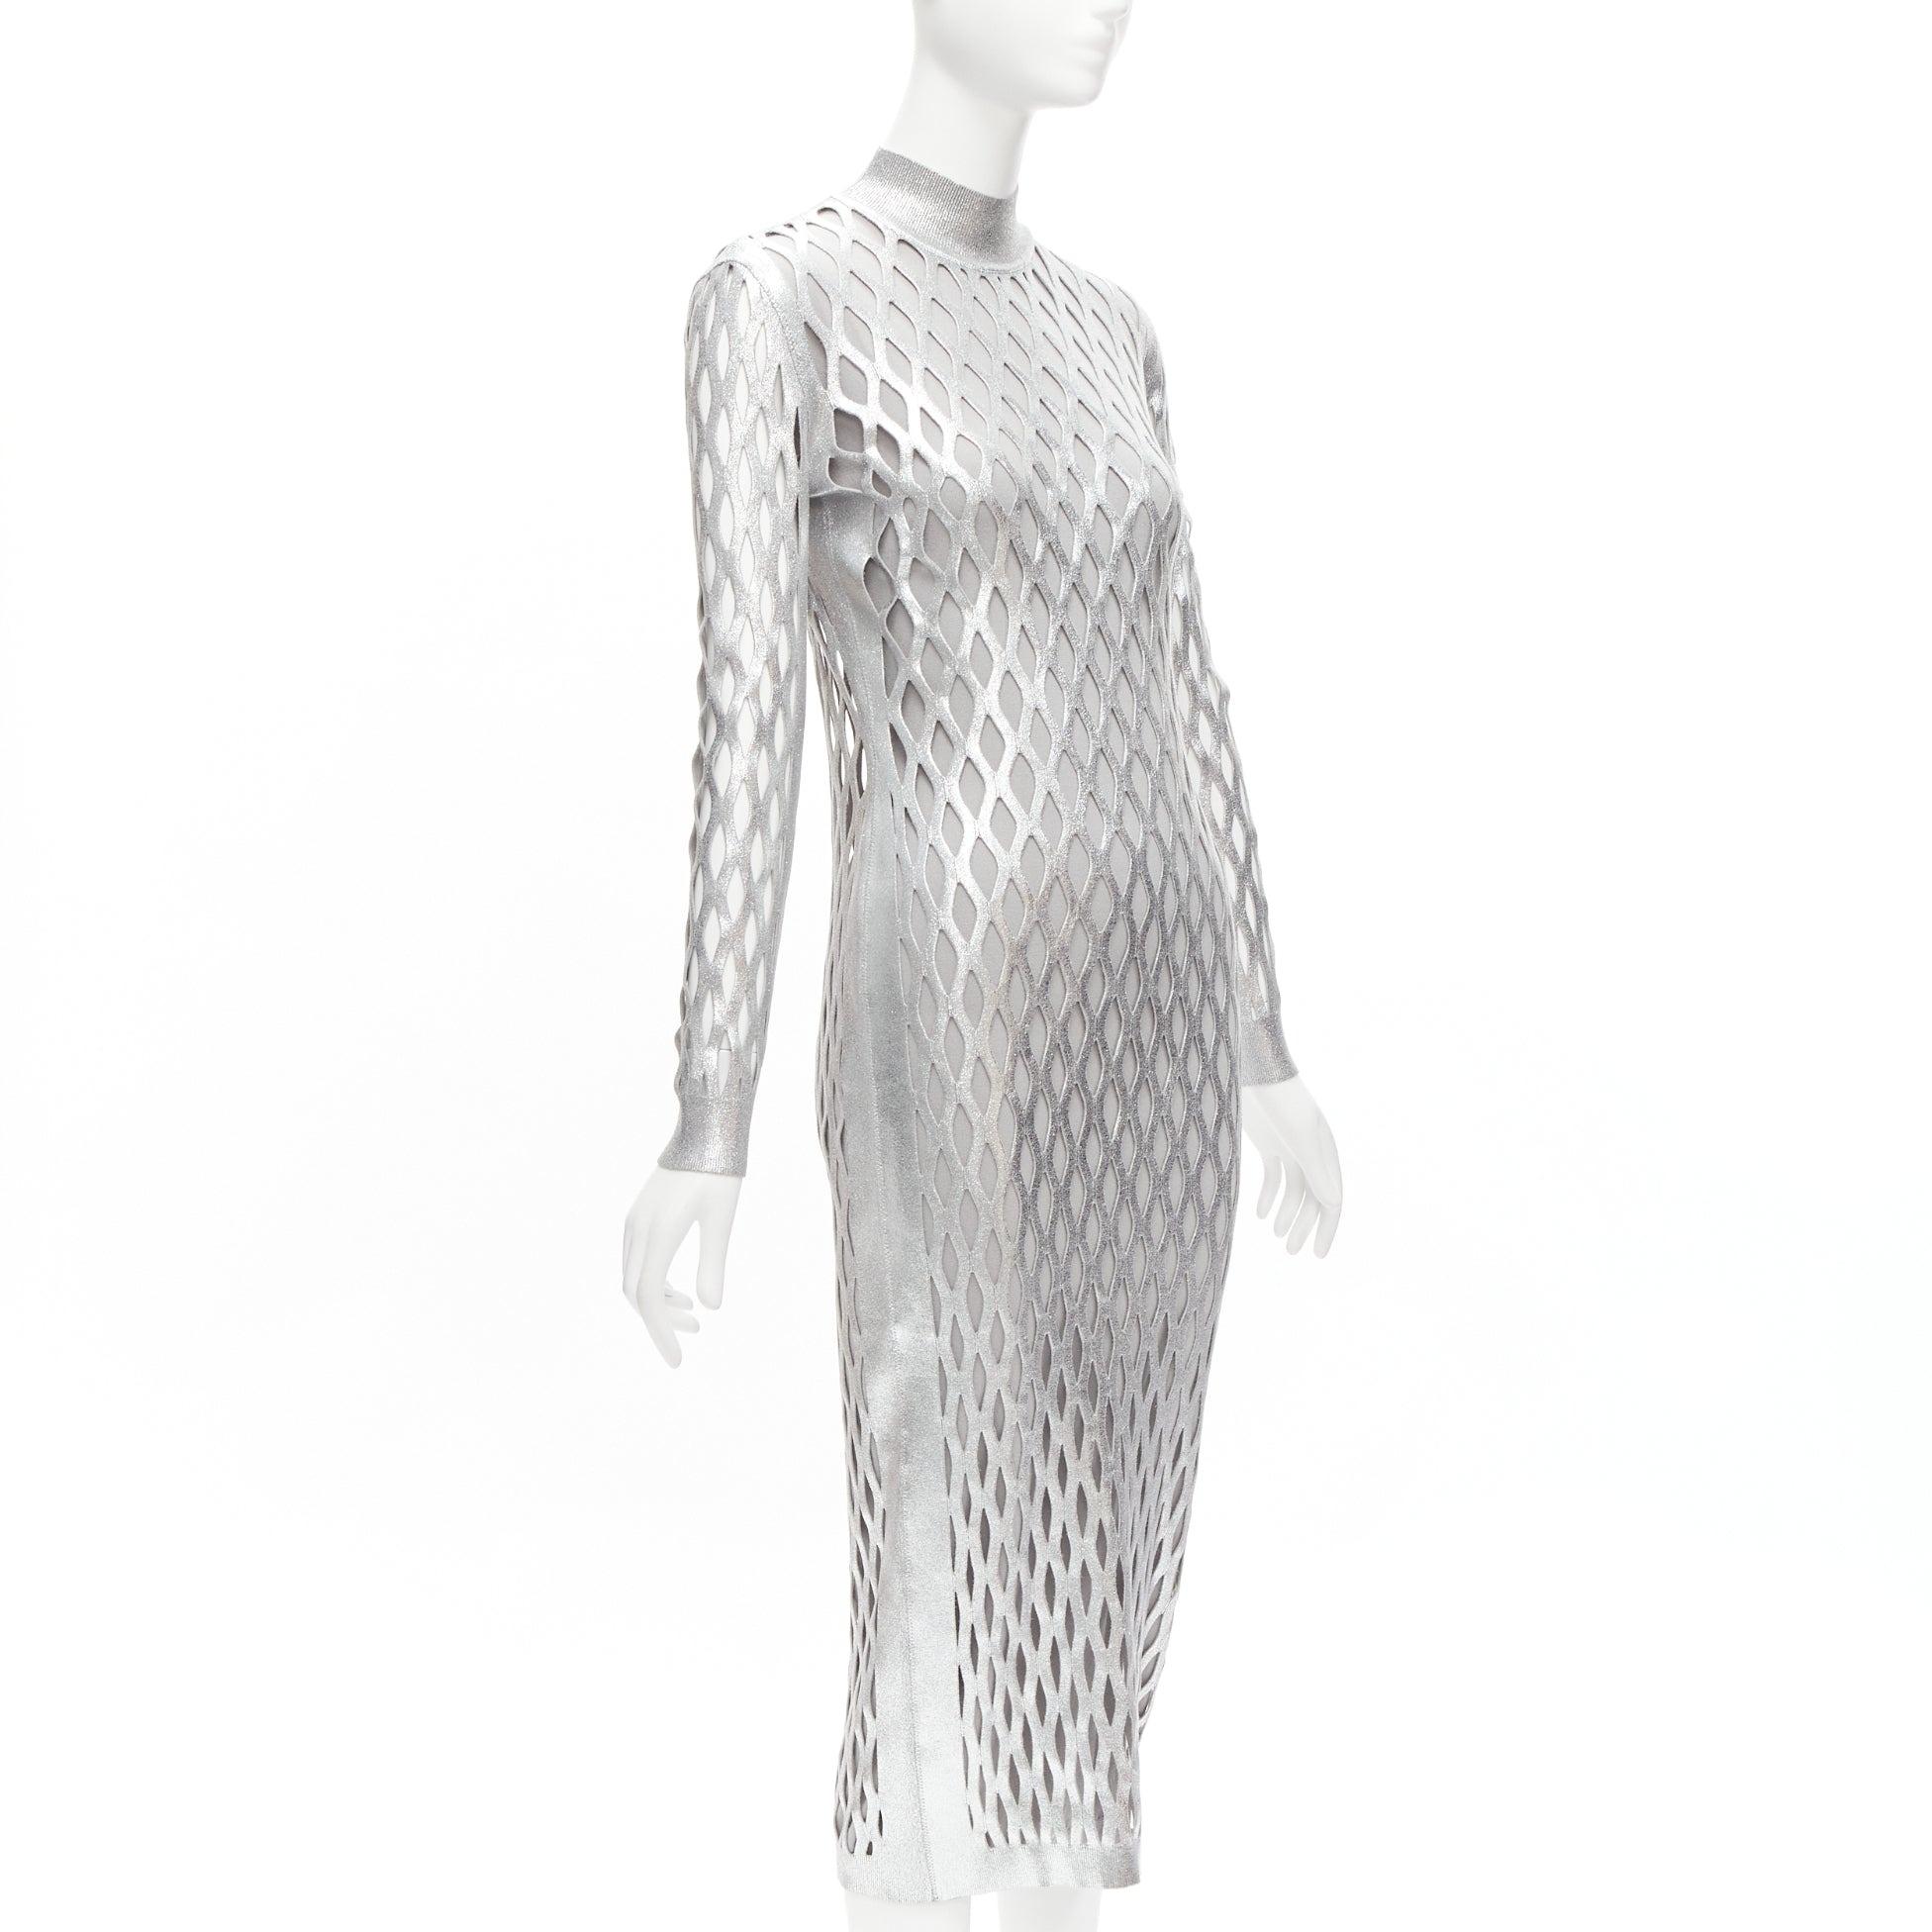 Silver new FENDI Nicki Minaj 2019 Runway Abito silver net cut out lined dress IT42 M